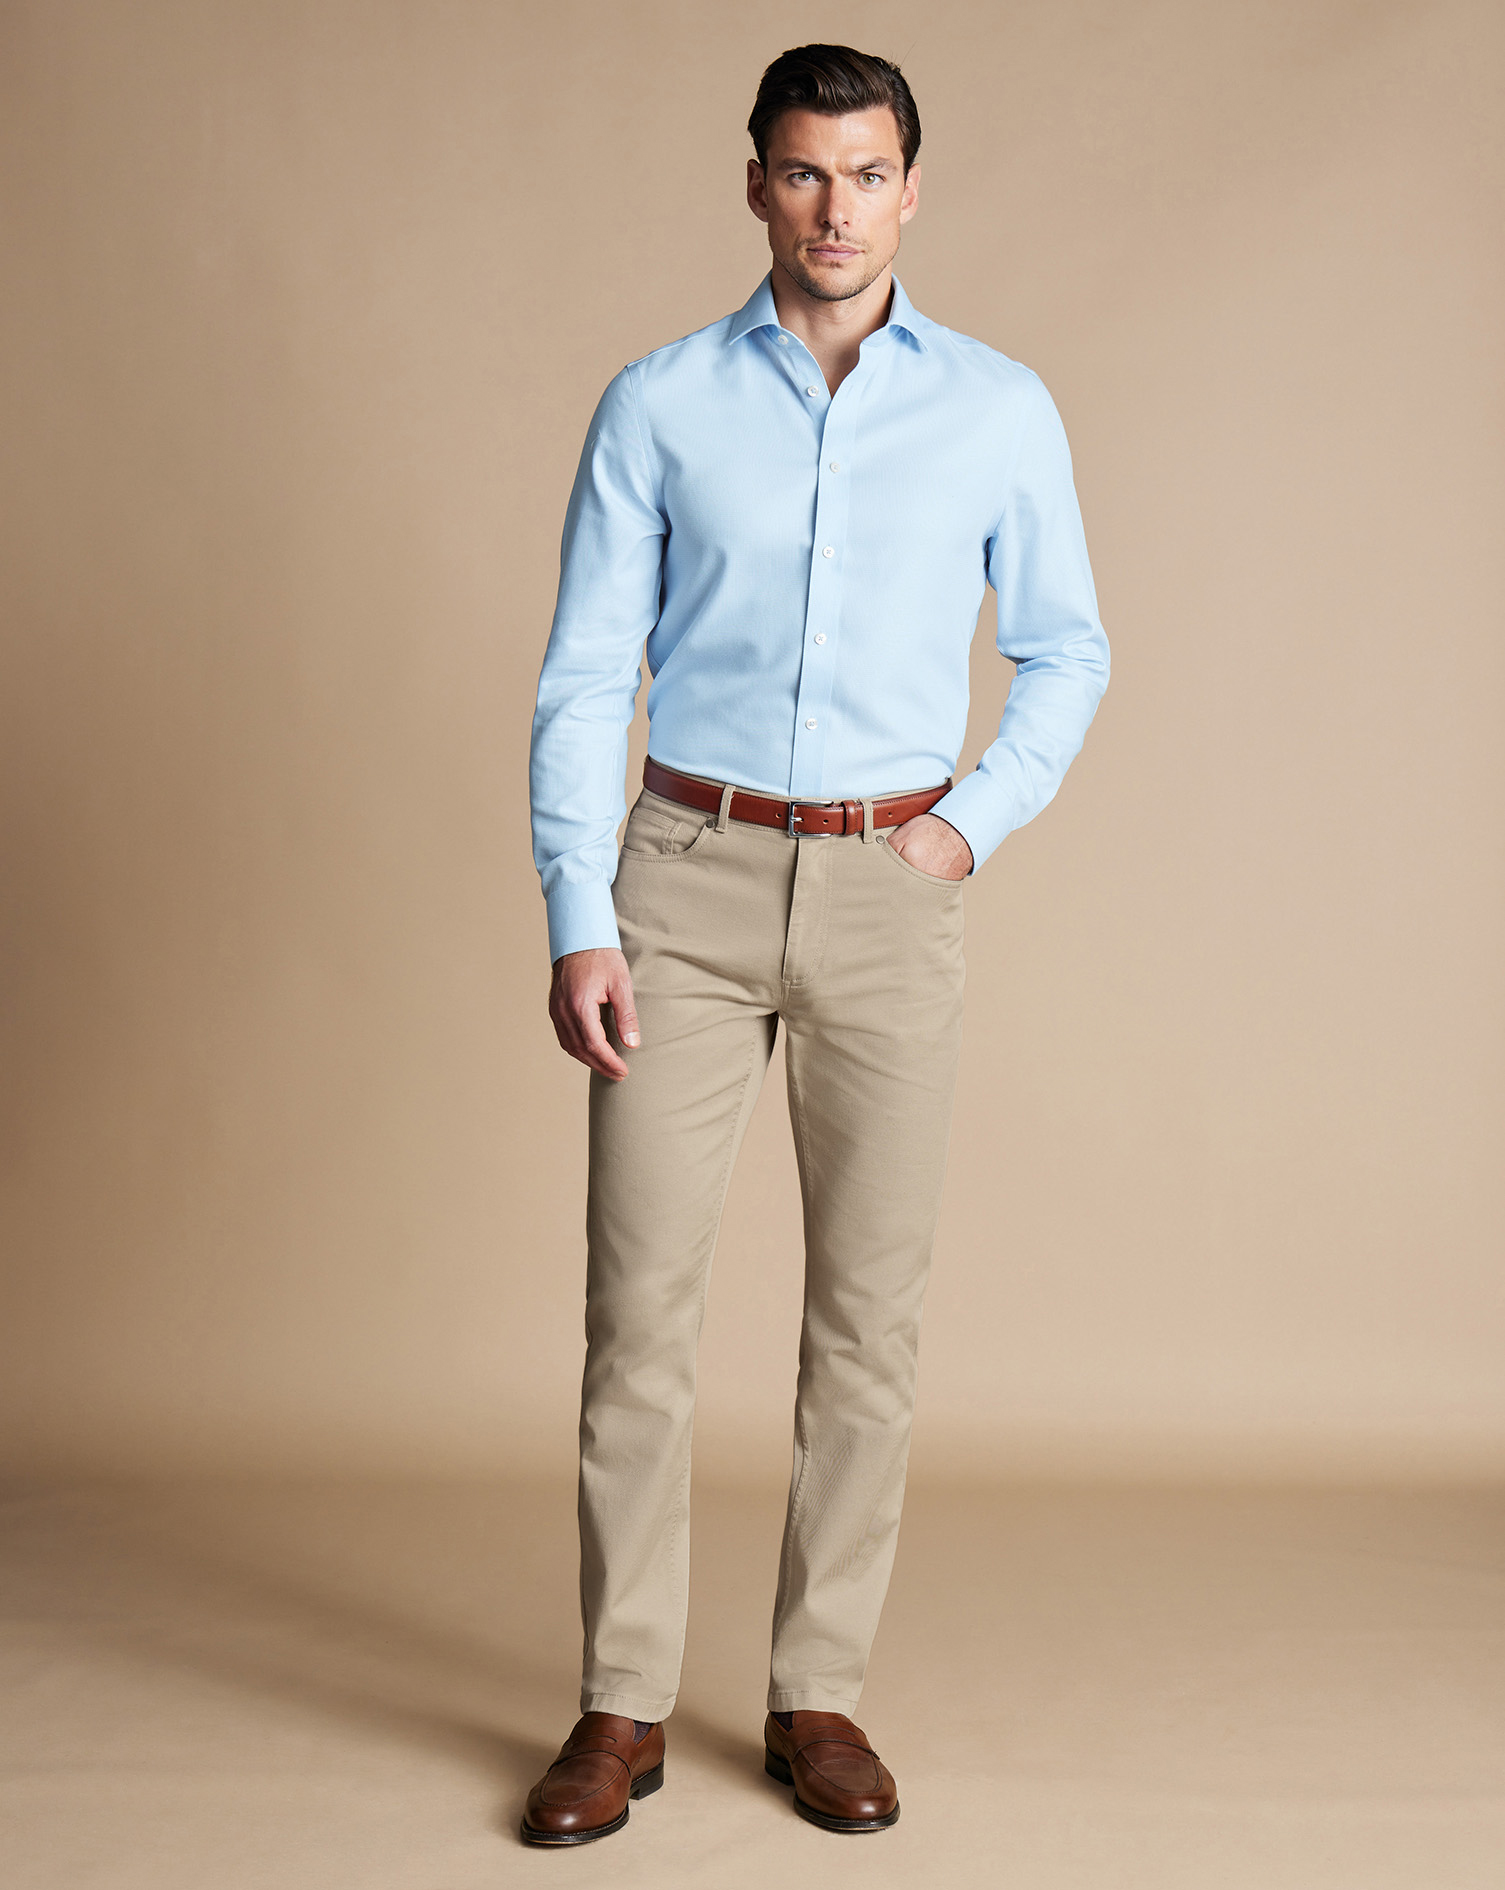 Men's Charles Tyrwhitt Twill 5 Pocket Jeans - Stone Neutral Size W38 L34 Cotton
